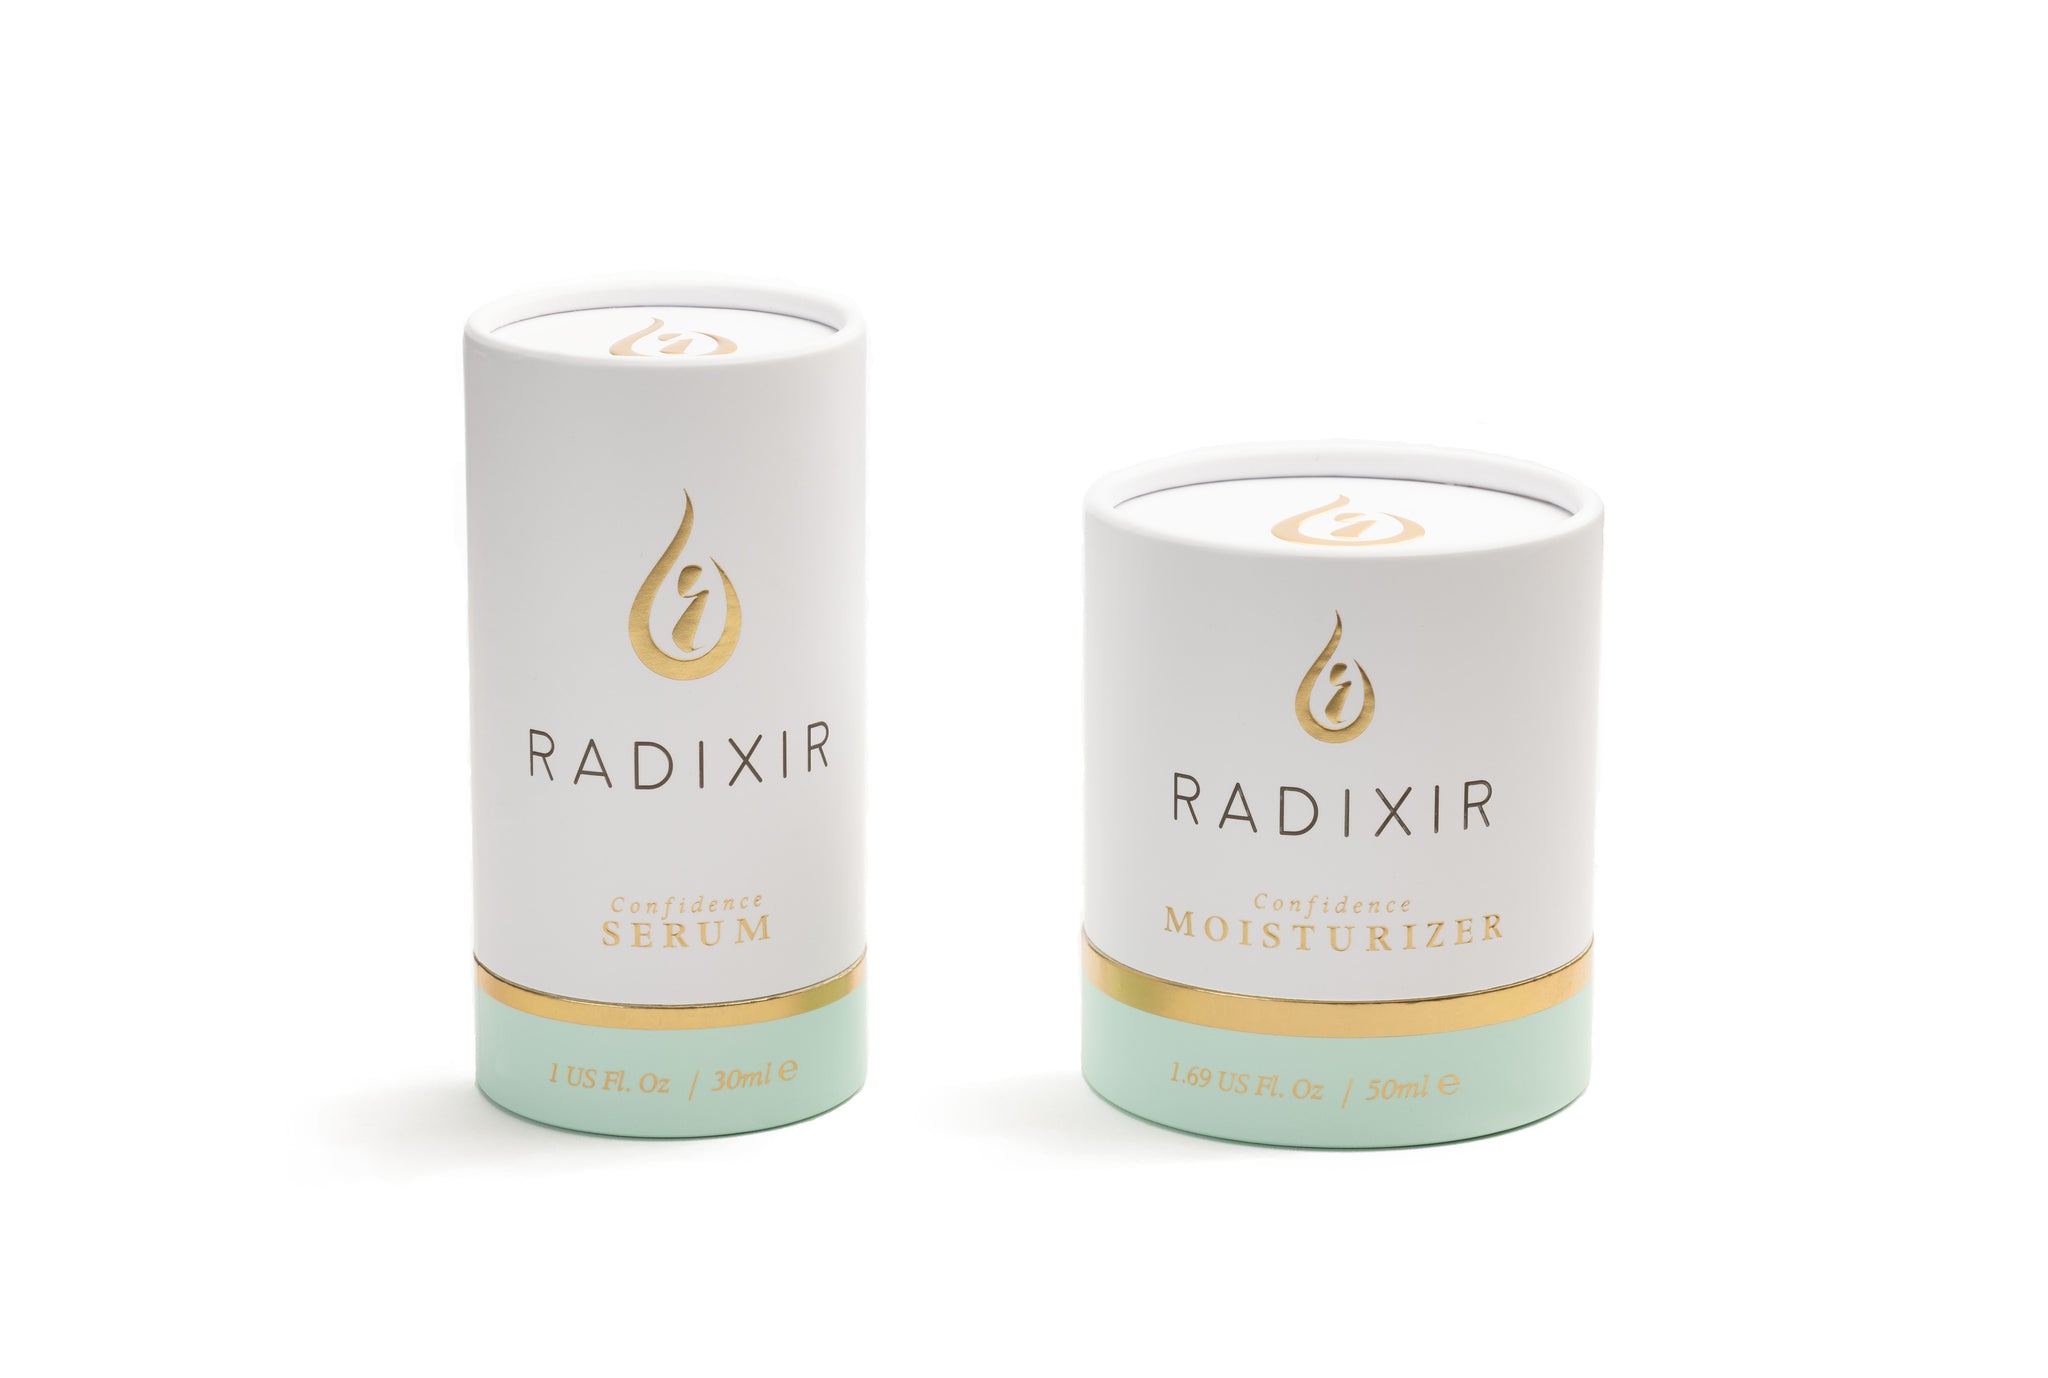 Radixir duo confidence serum, confidence moisturiser